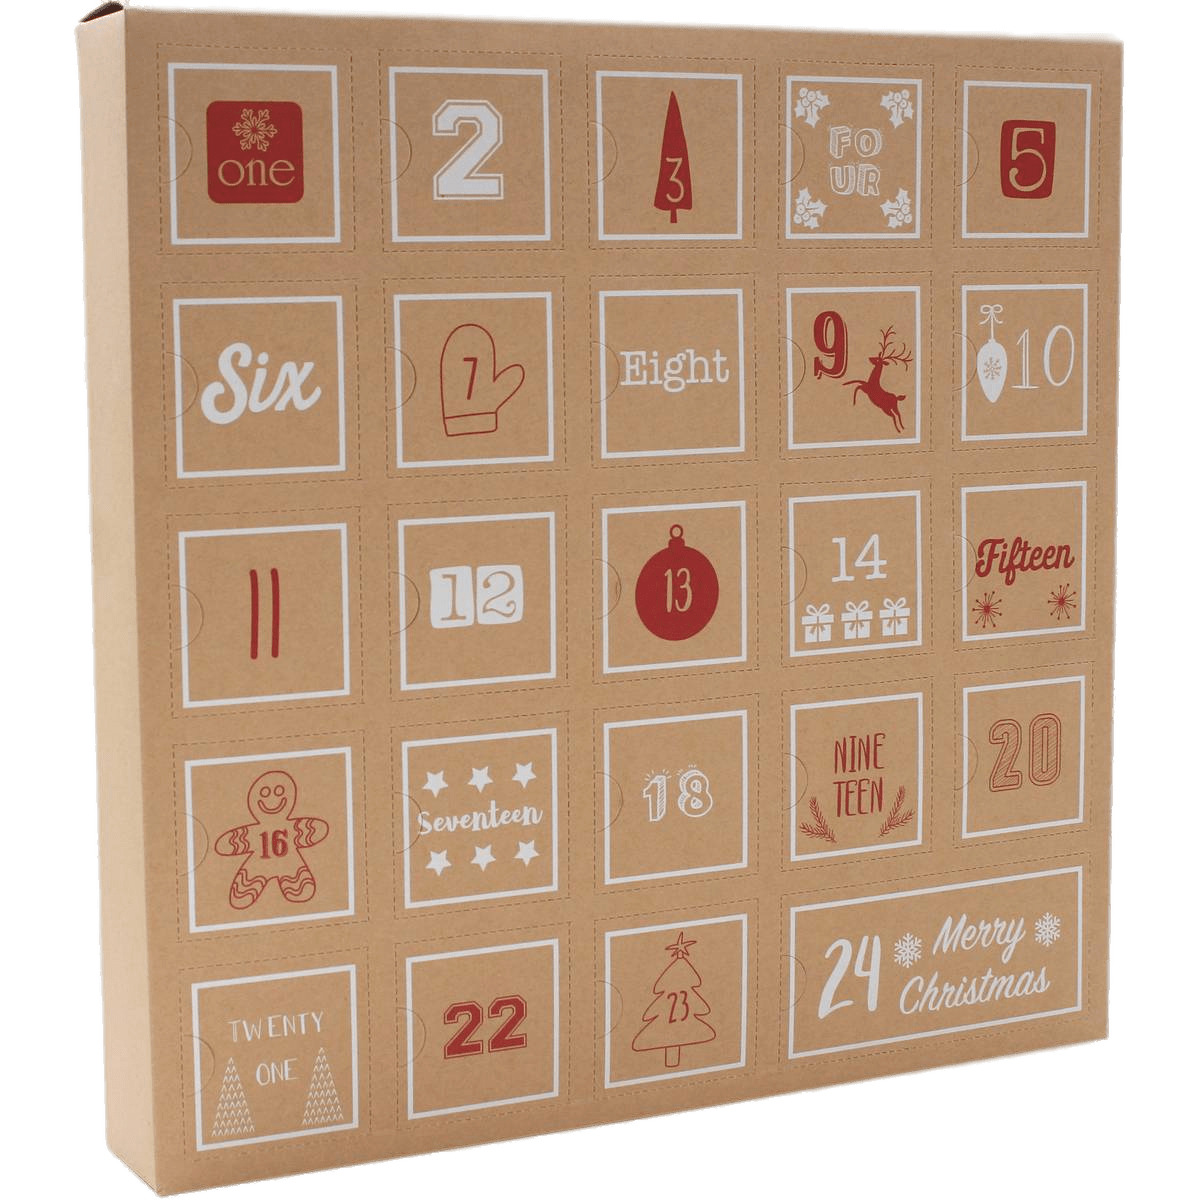 Cardboard Advent Calendar icons